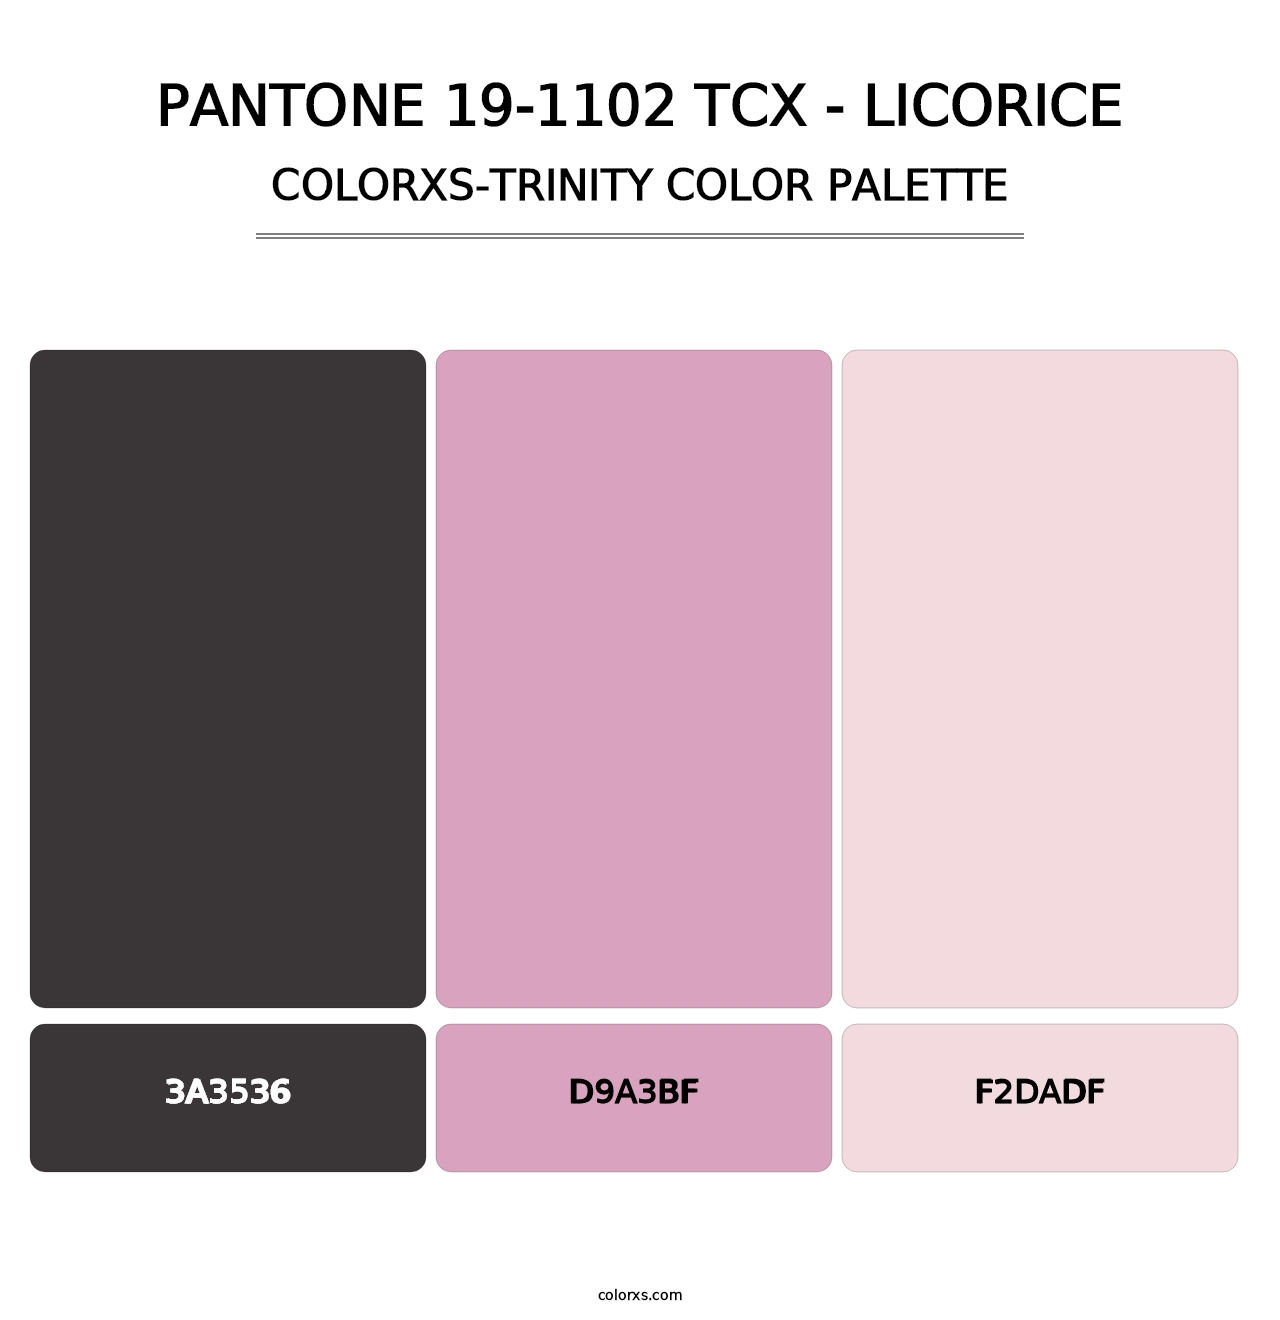 PANTONE 19-1102 TCX - Licorice - Colorxs Trinity Palette